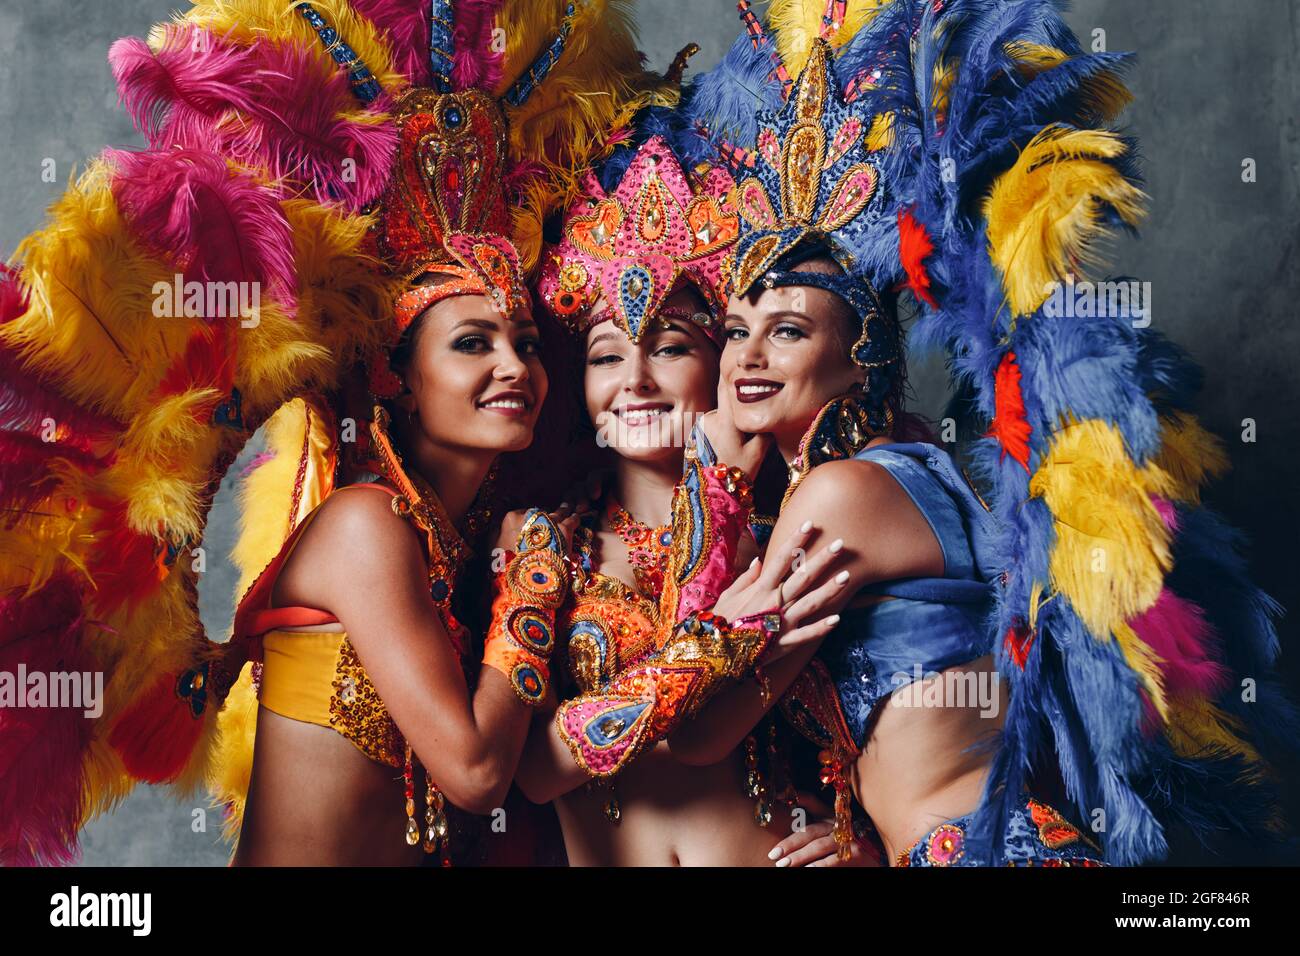 Three Woman in brazilian samba carnival costume with colorful feathers  plumage Stock Photo - Alamy